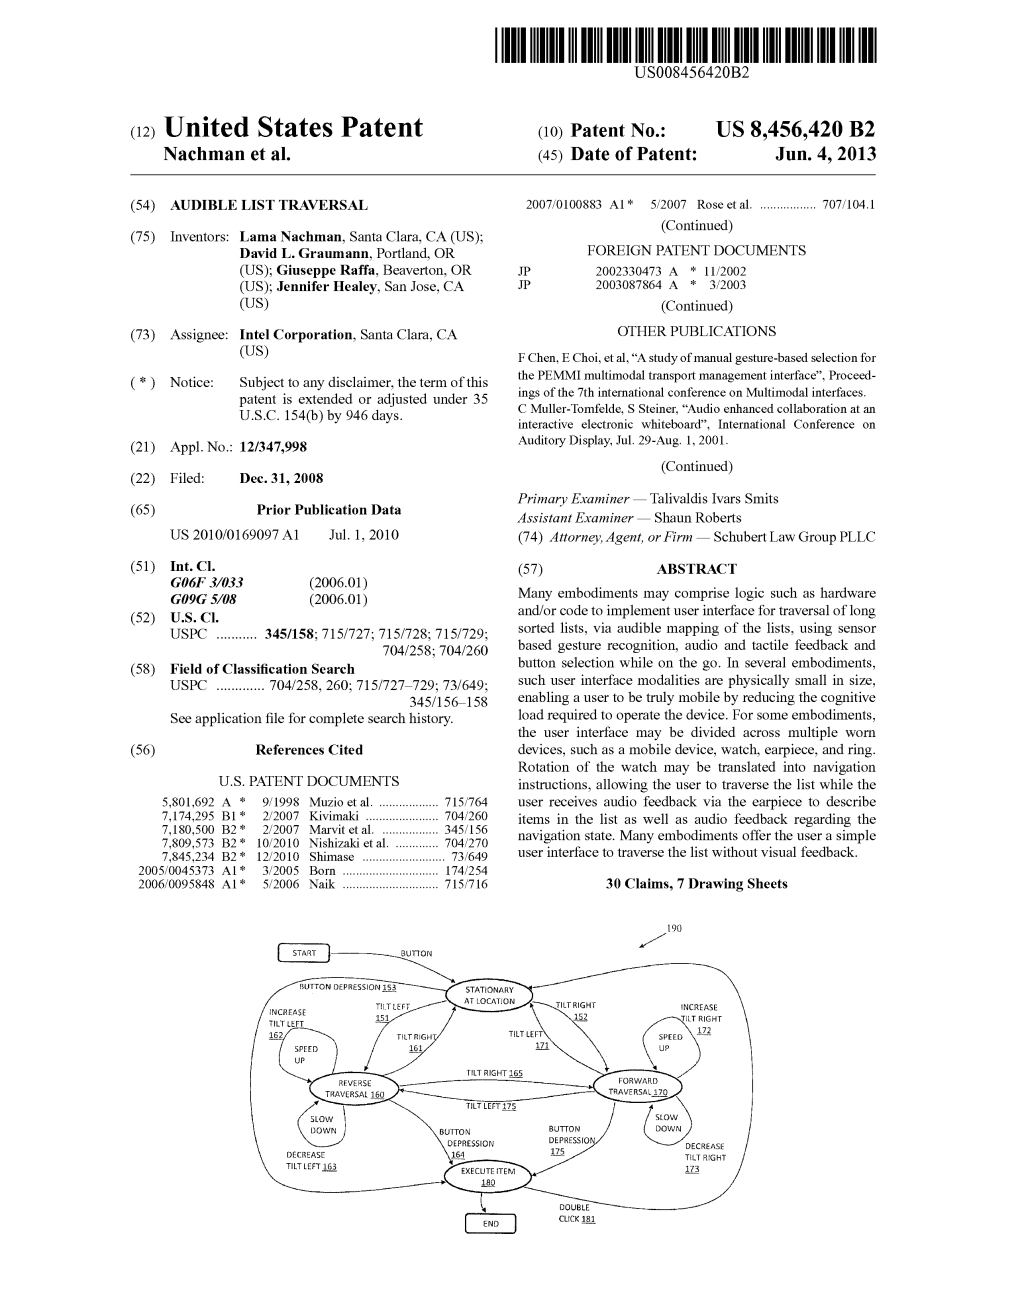 United States Patent (10) Patent No.: US 8,456,420 B2 Nachman Et Al